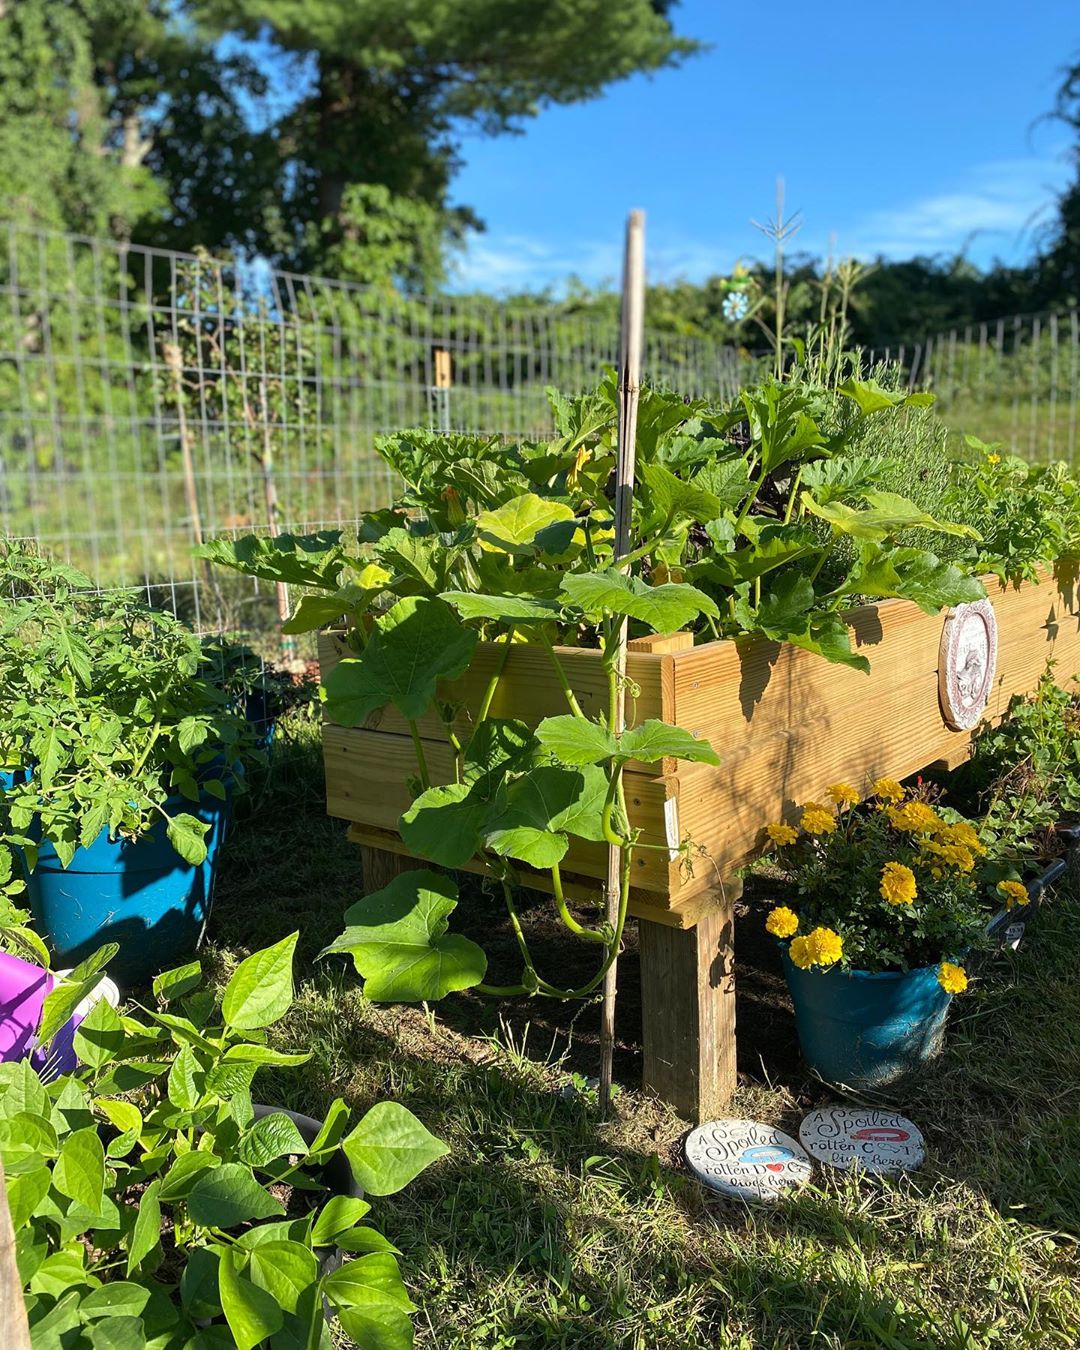 Homemade Garden Box in Backyard. Photo by Instagram user @homestead_honey__